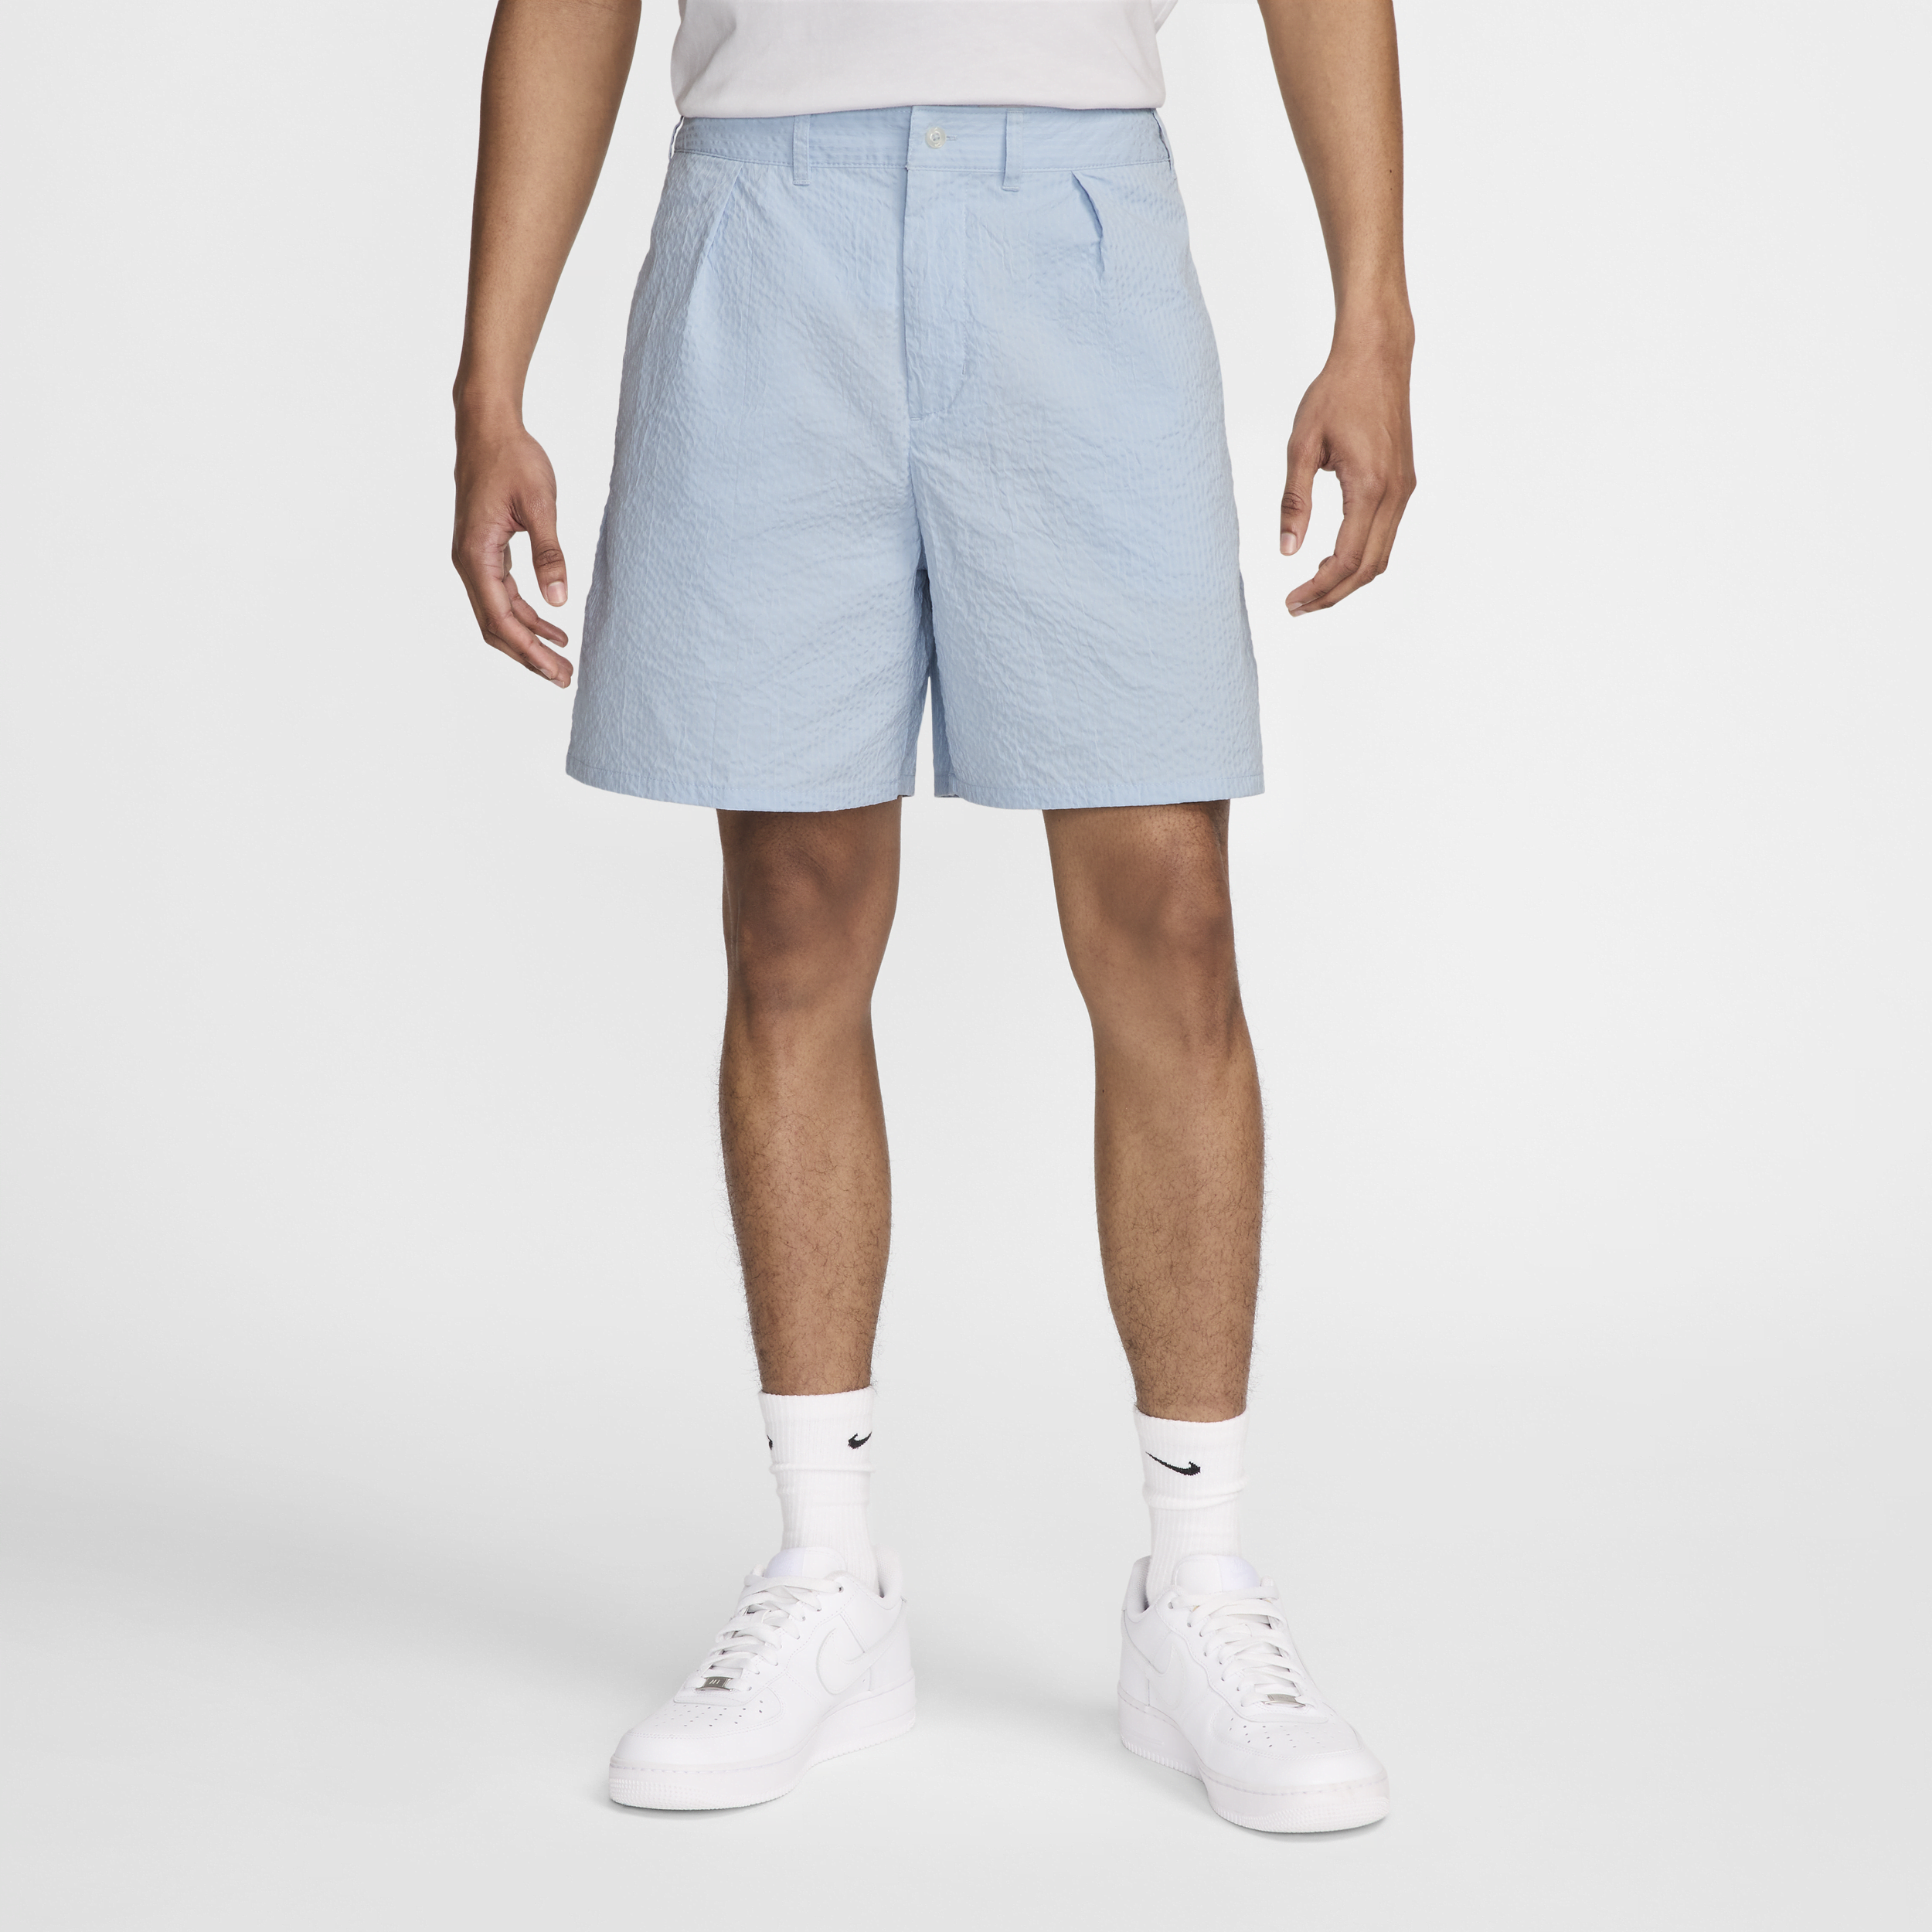 Nike Life Pantalón corto de tejido seersucker - Hombre - Azul